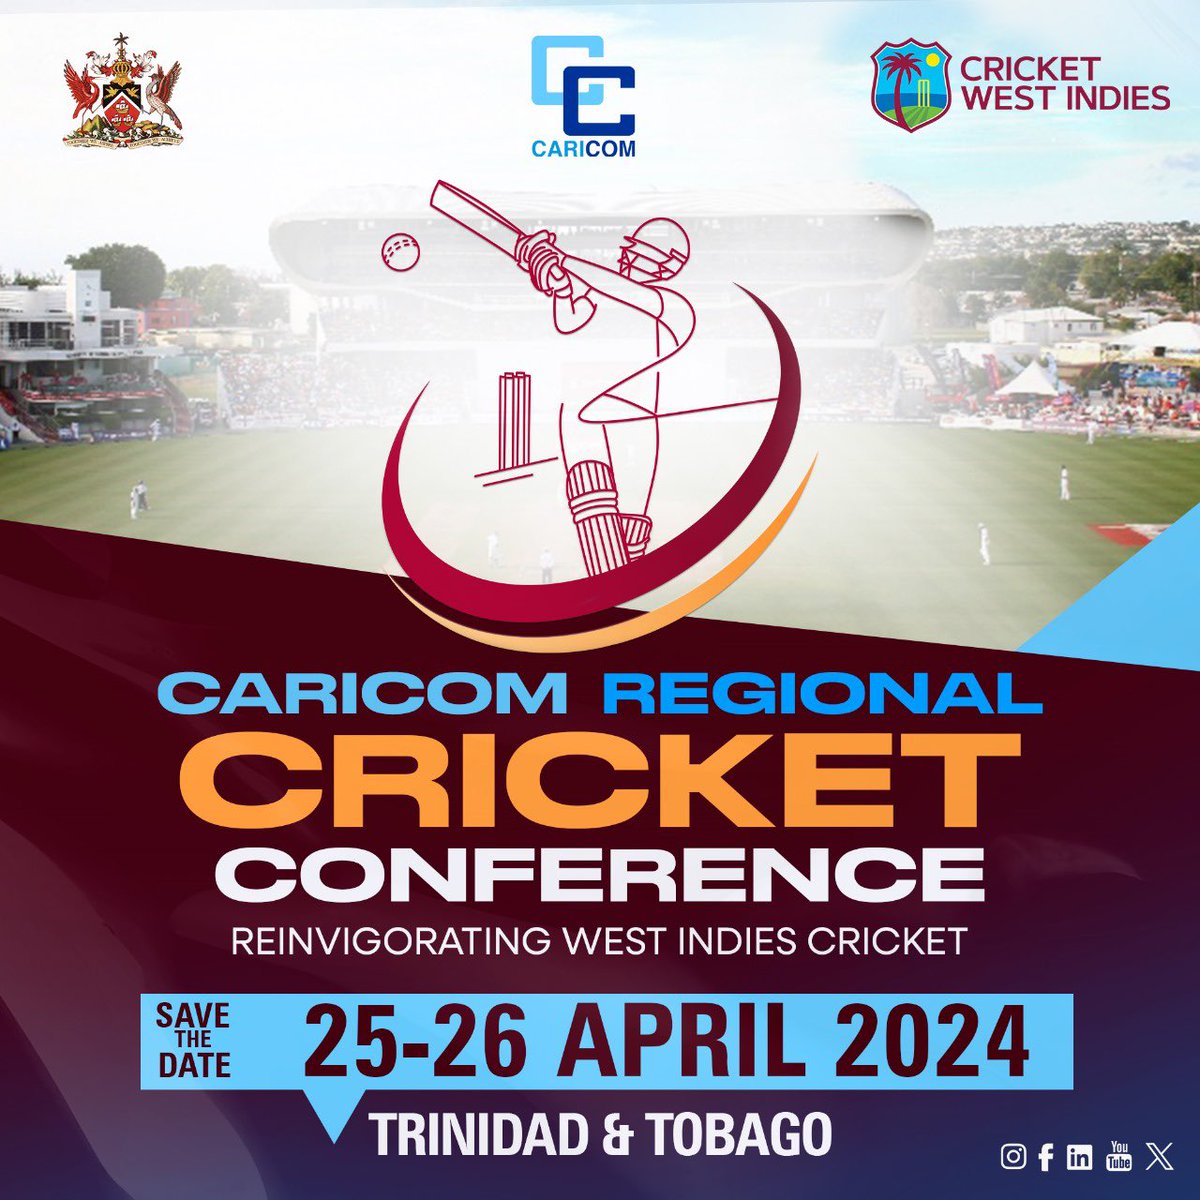 #SAVETHEDATE 🏏#CARICOM Regional Cricket Conference 📄Theme: Reinvigorating West Indies Cricket 📅 25-26 April 2024 🏢Hyatt Regency Trinidad, POS 🇹🇹 💻Join us live on CARICOM's social media platforms 🇦🇬🇧🇸🇧🇧🇧🇿🇩🇲🇬🇩🇬🇾🇭🇹🇯🇲🇲🇸🇰🇳🇱🇨🇻🇨🇸🇷🇹🇹🇦🇮🇧🇲🇻🇬🇰🇾🇹🇨 #WICRICKET #OURGAME #CRICKETINTHEREGION